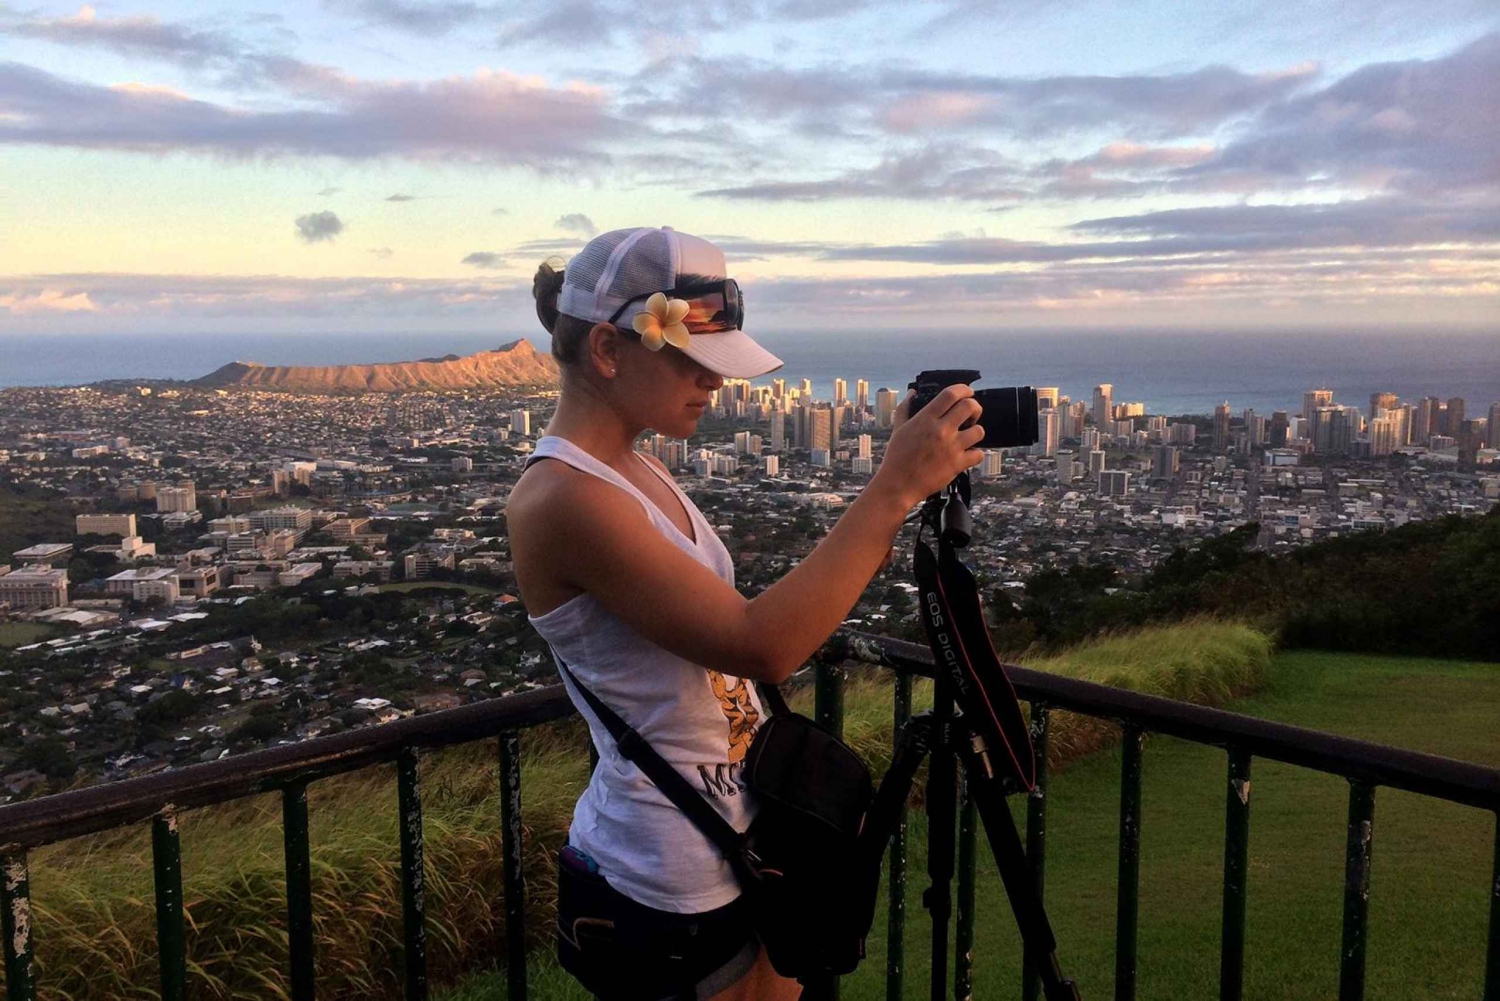 Oahu: Half-Day Sunset Photo Tour from Waikiki